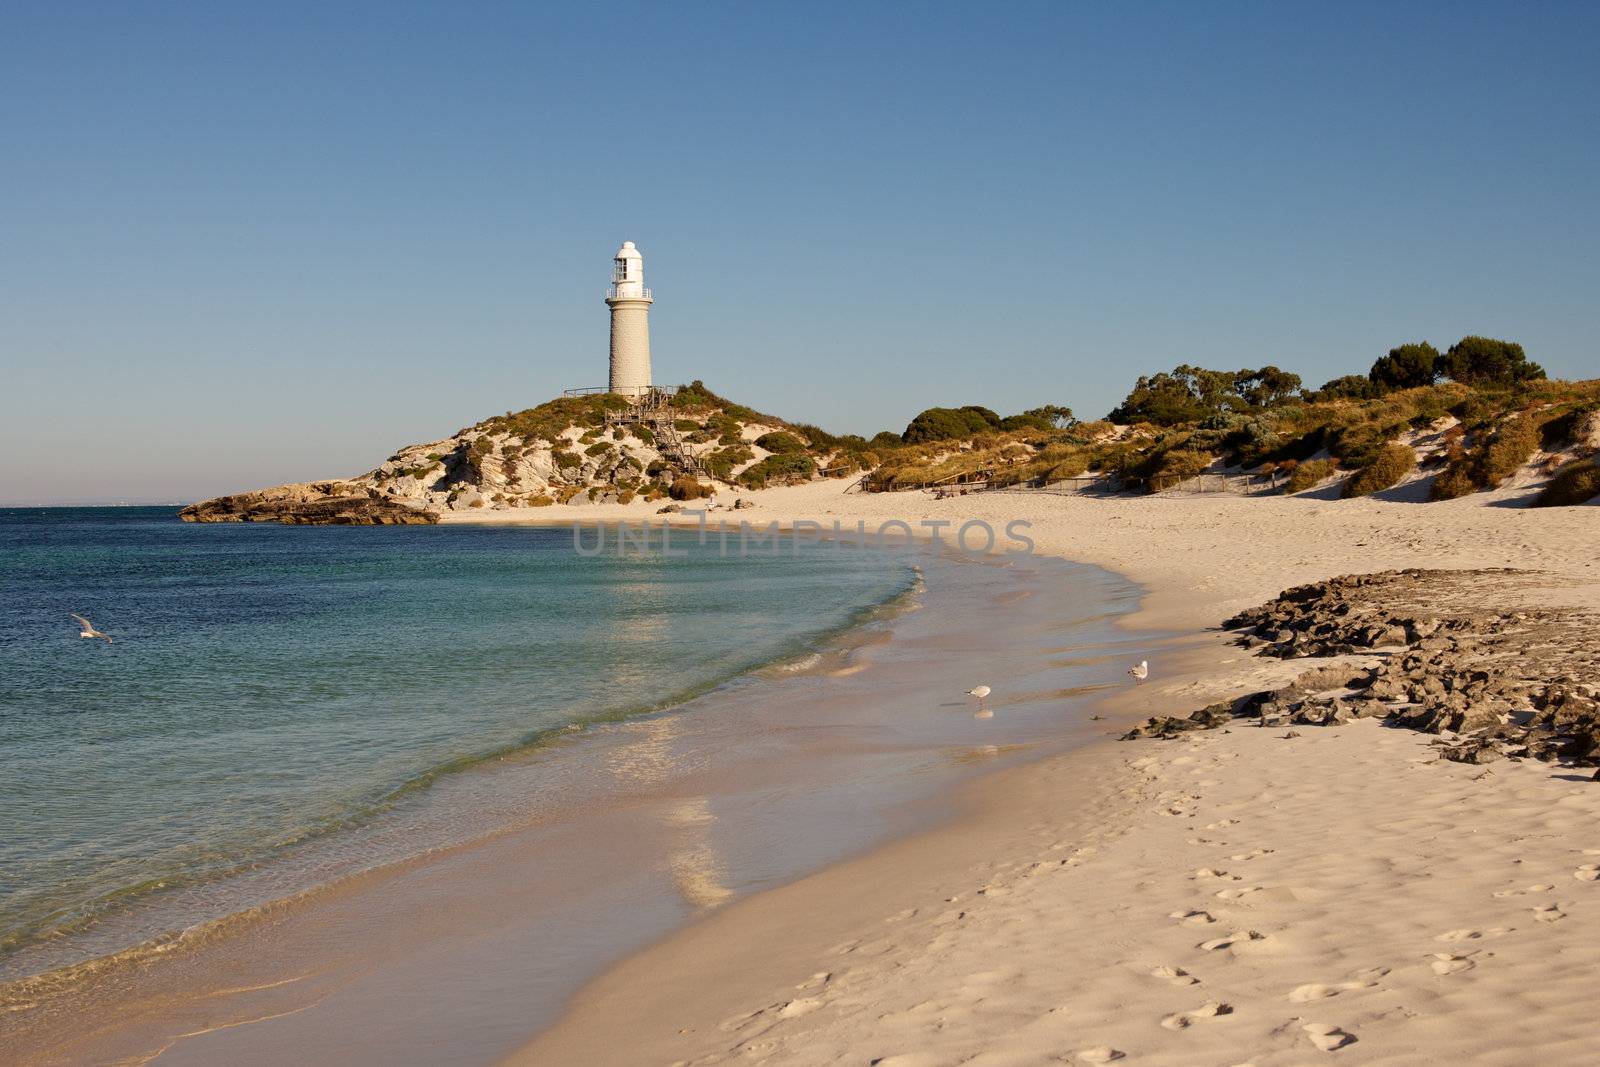 Bathurst Lighthouse – one of two lighthouses on Rottnest Island, Western Australia.